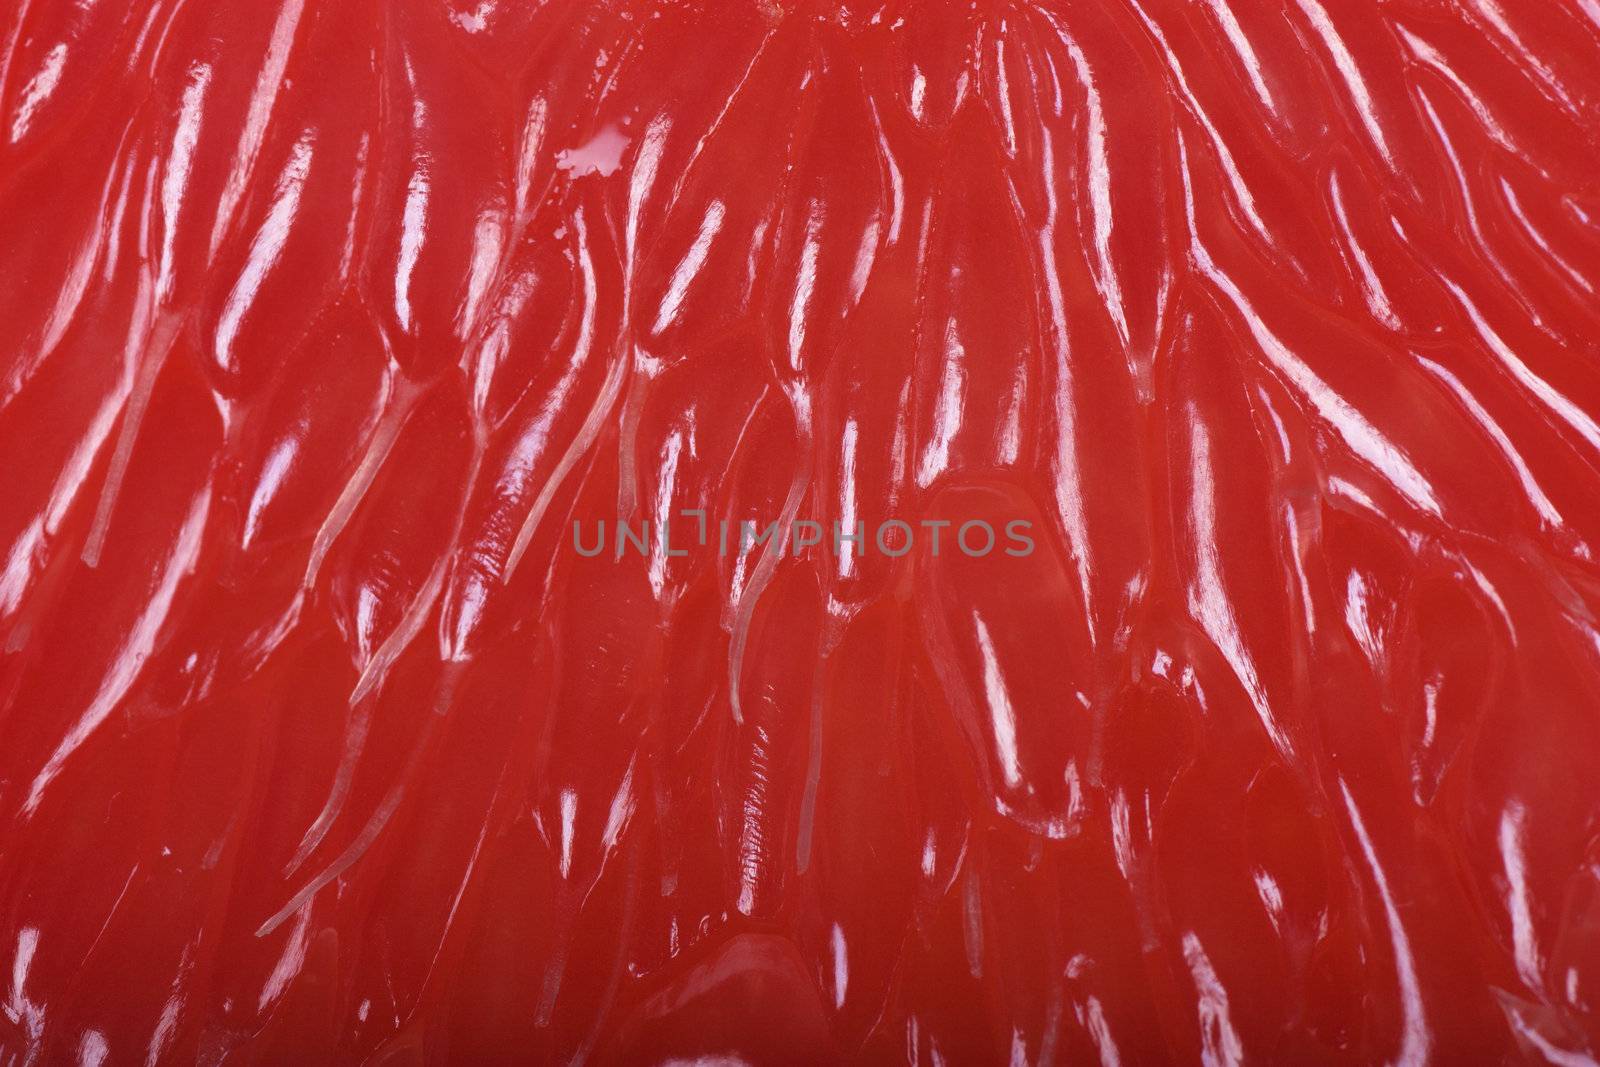 Macro view of ripe red grapefruit pulp